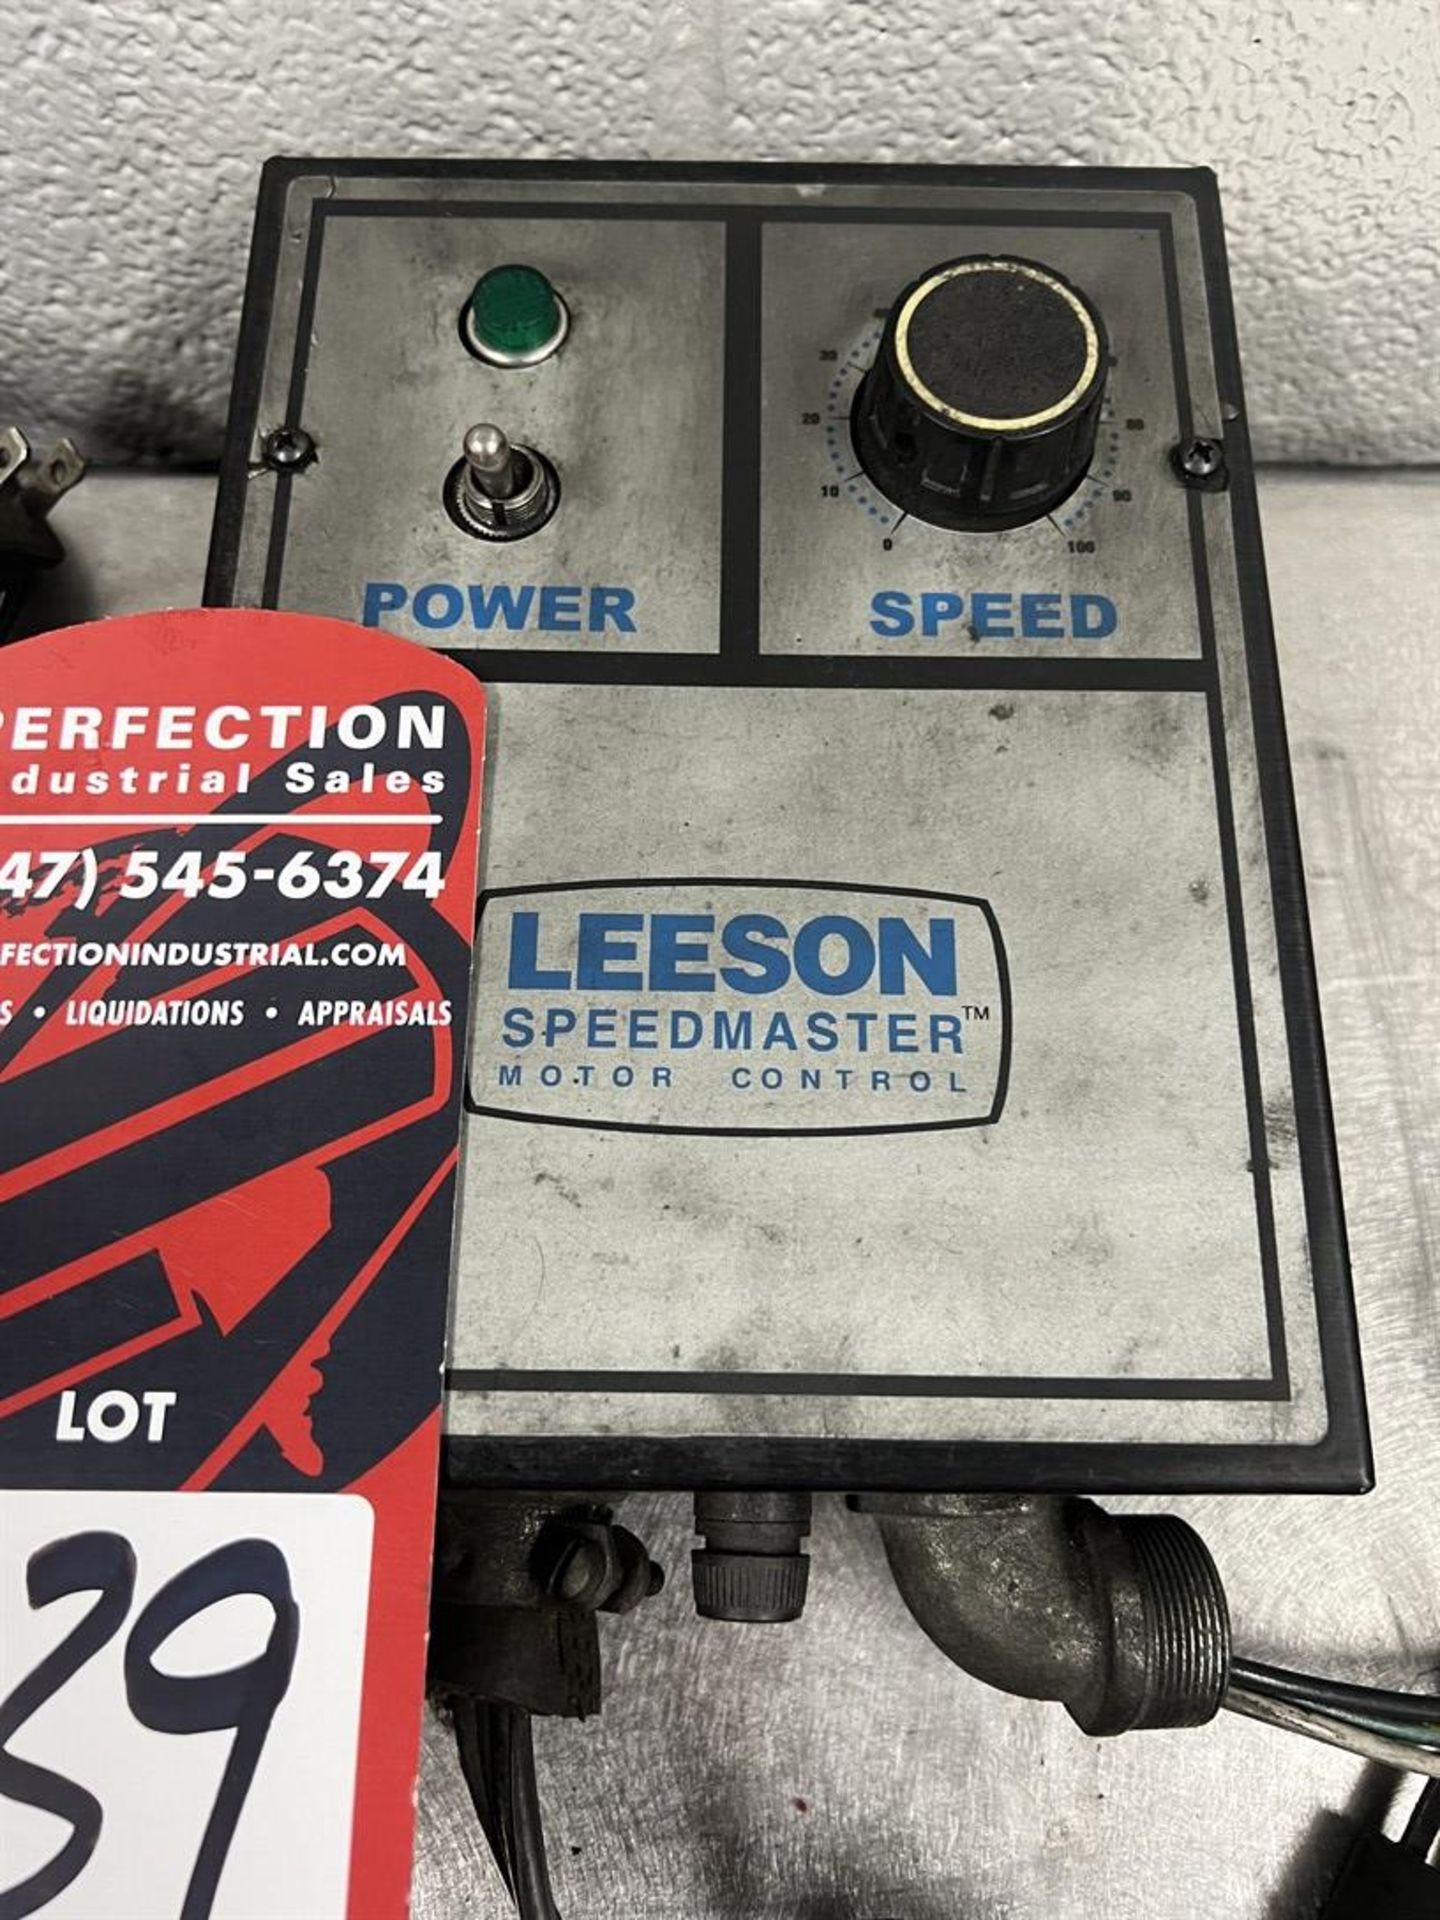 LEESON Speedmaster Motor Control - Image 2 of 2